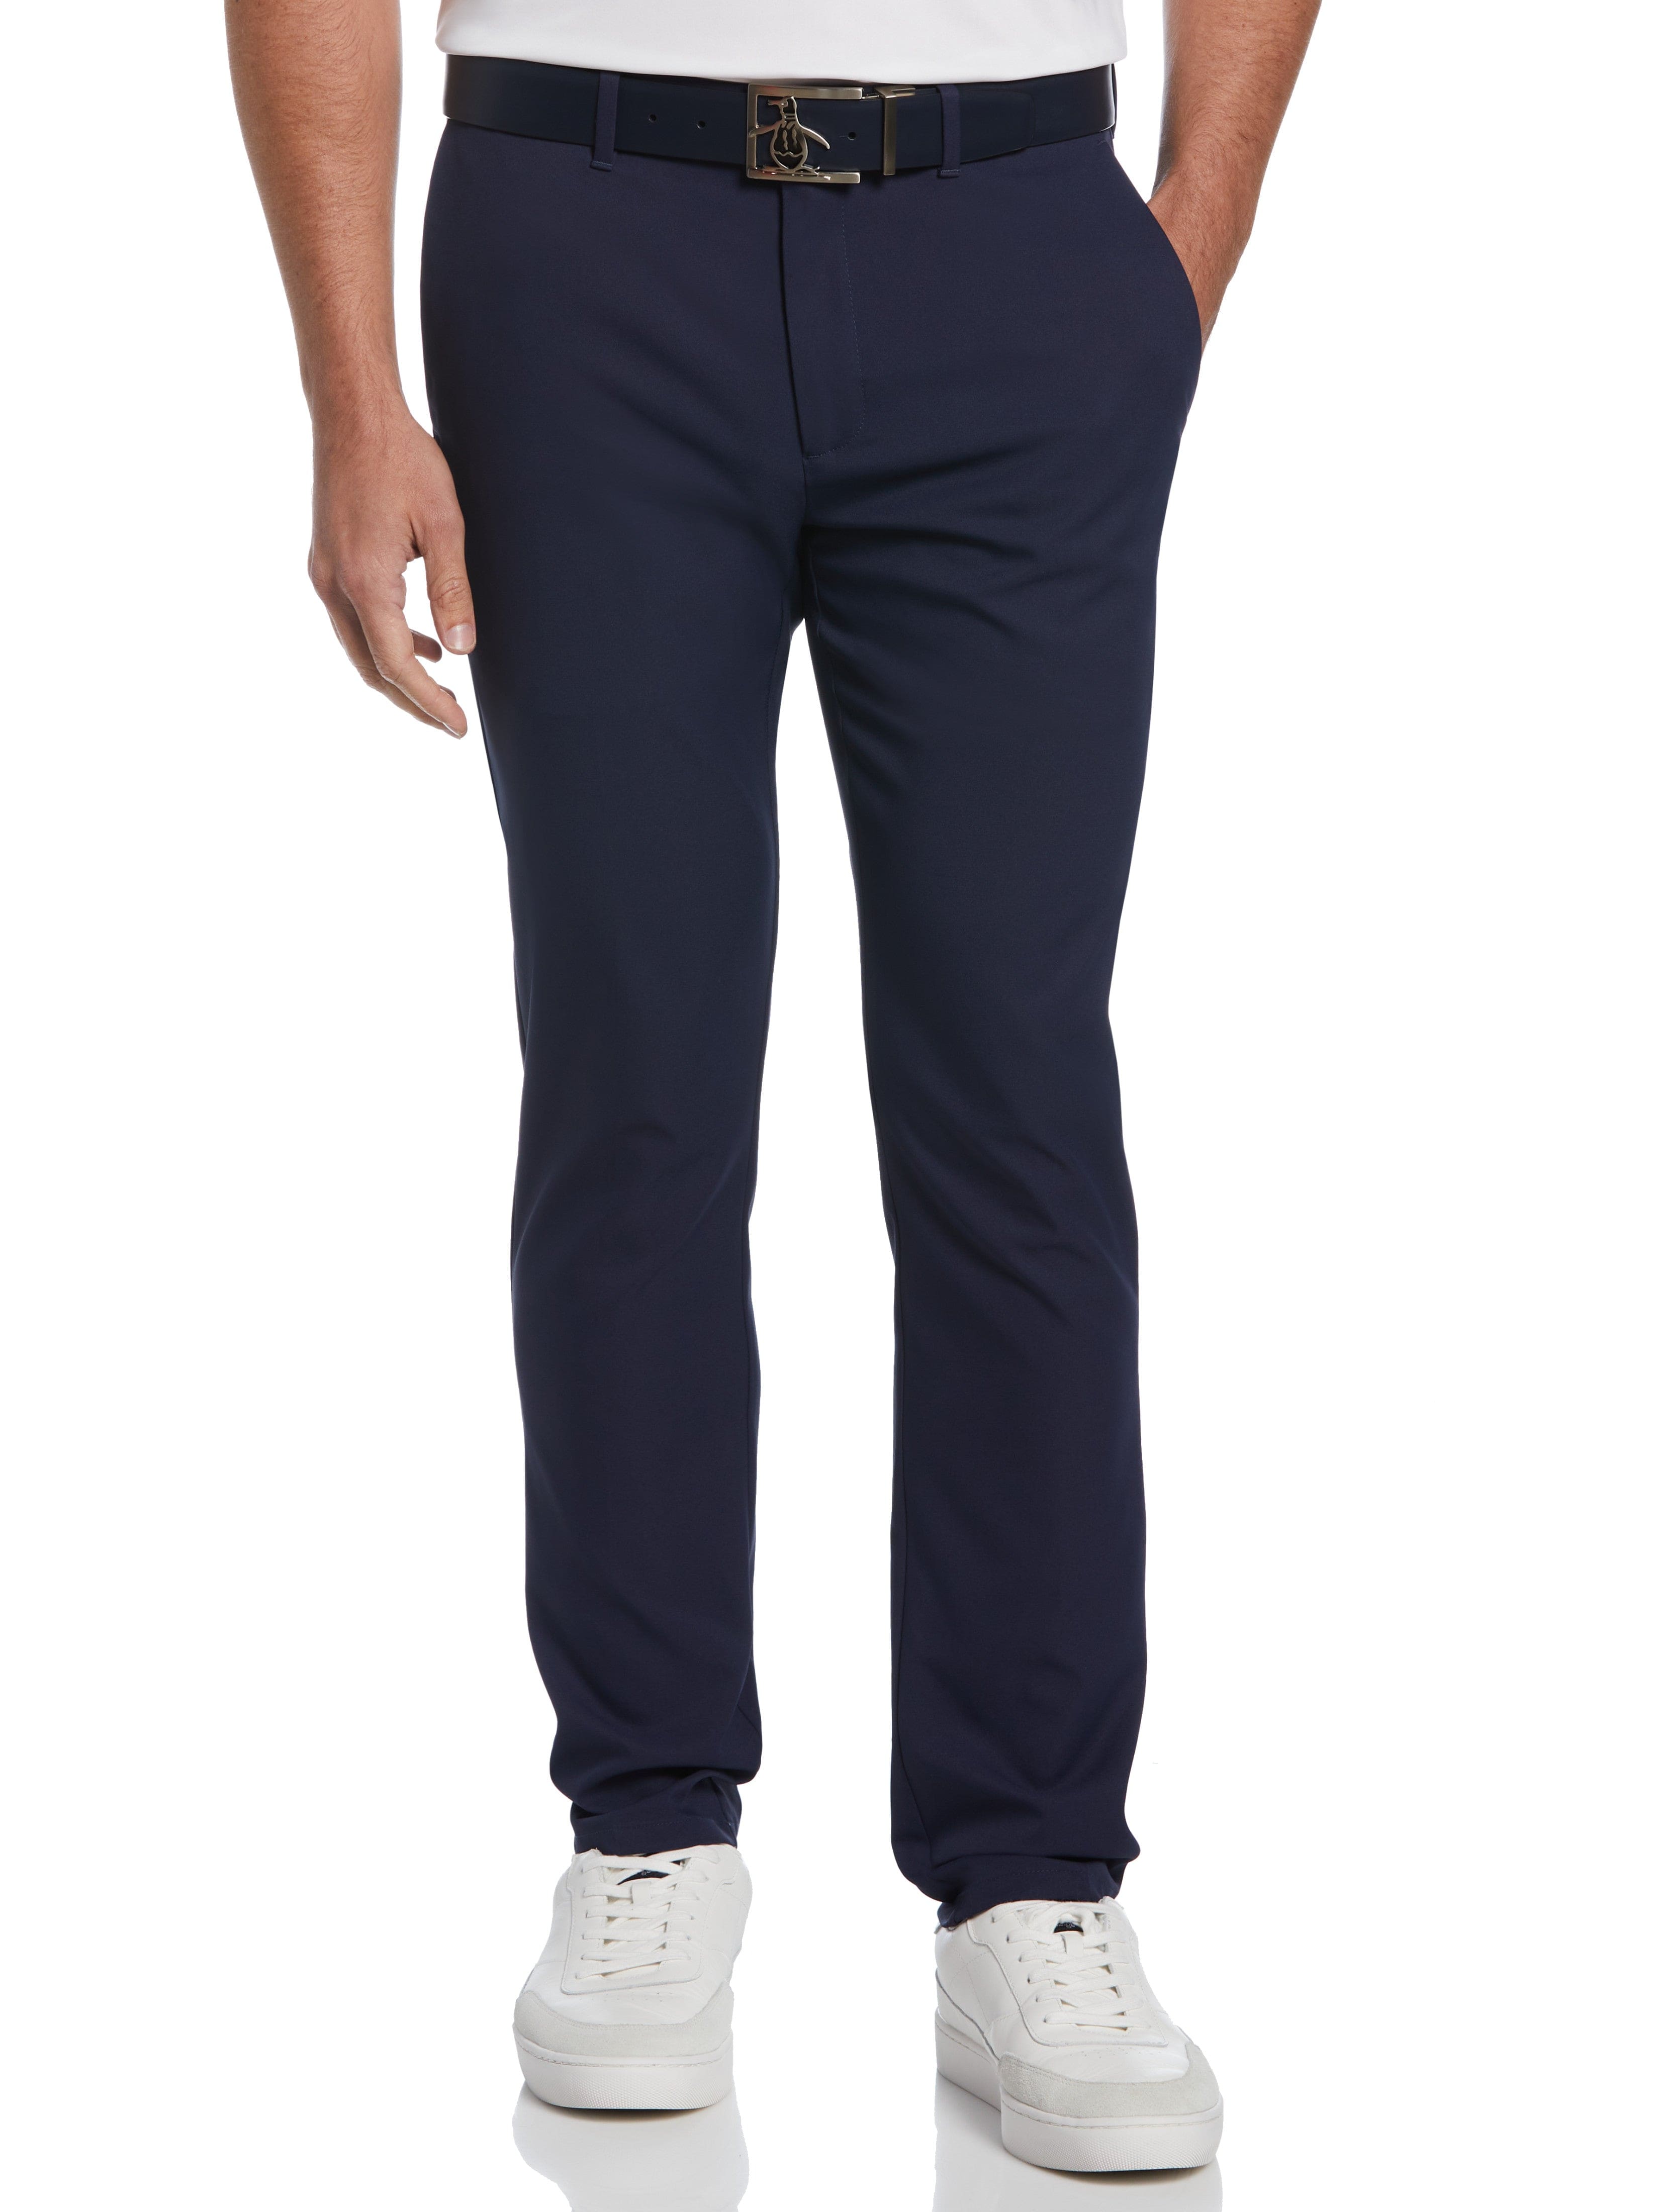 Original Penguin Mens Flat Front Solid Golf Pants, Size 30 x 32, Dark Navy Blue, 100% Polyester | Golf Apparel Shop